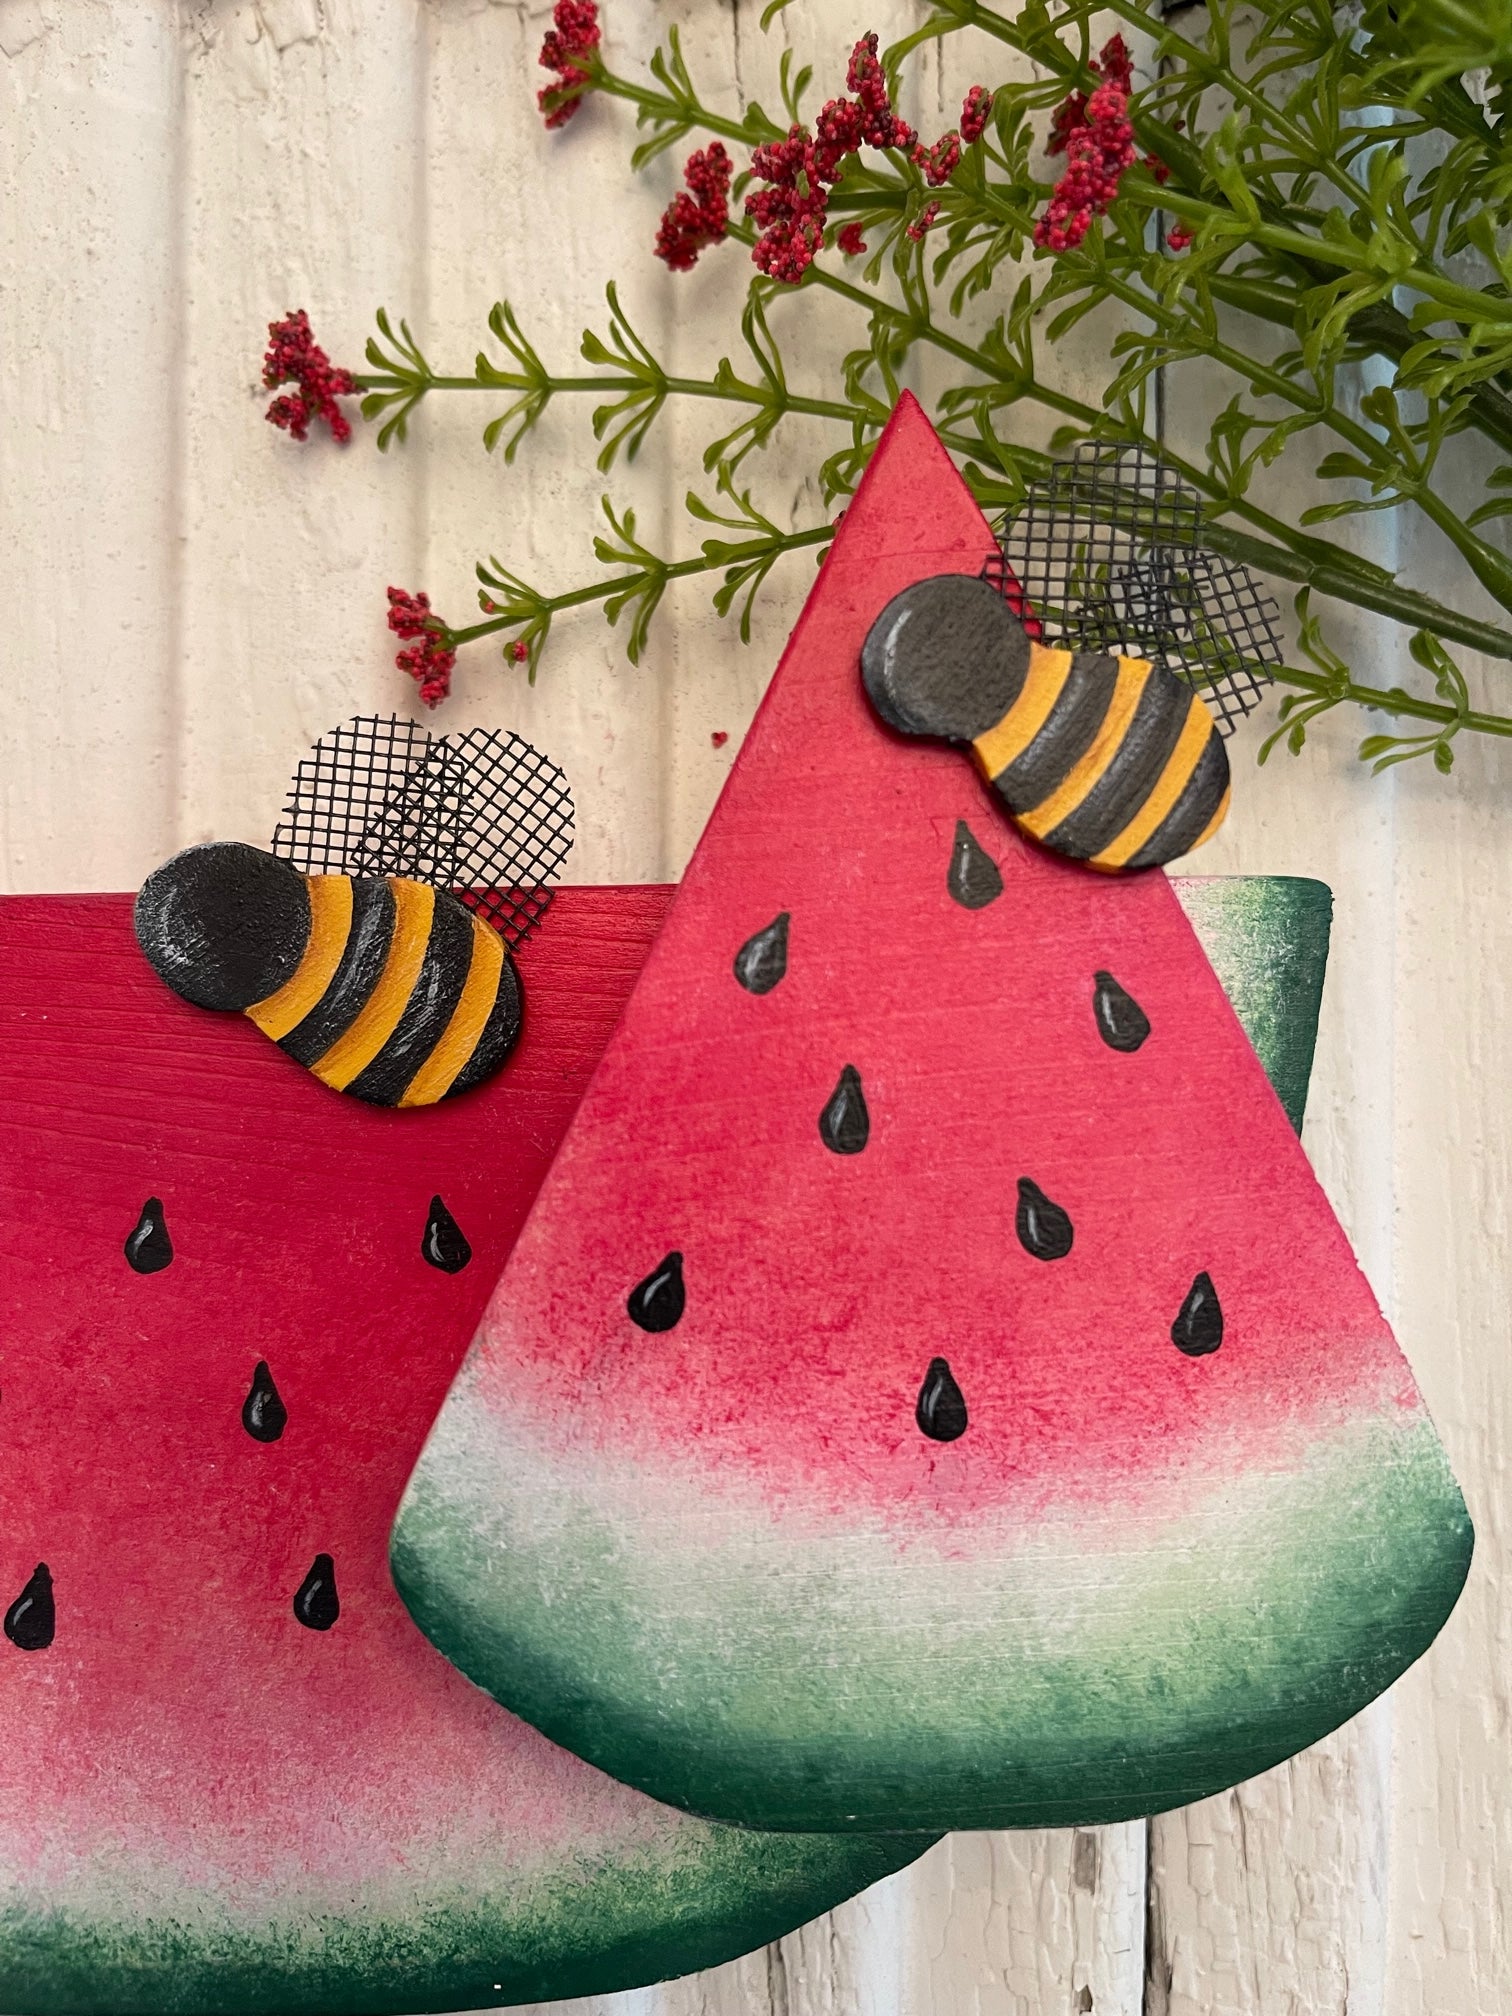 Watermelon Painting on Wood Board- Kit for Kids - Create Art